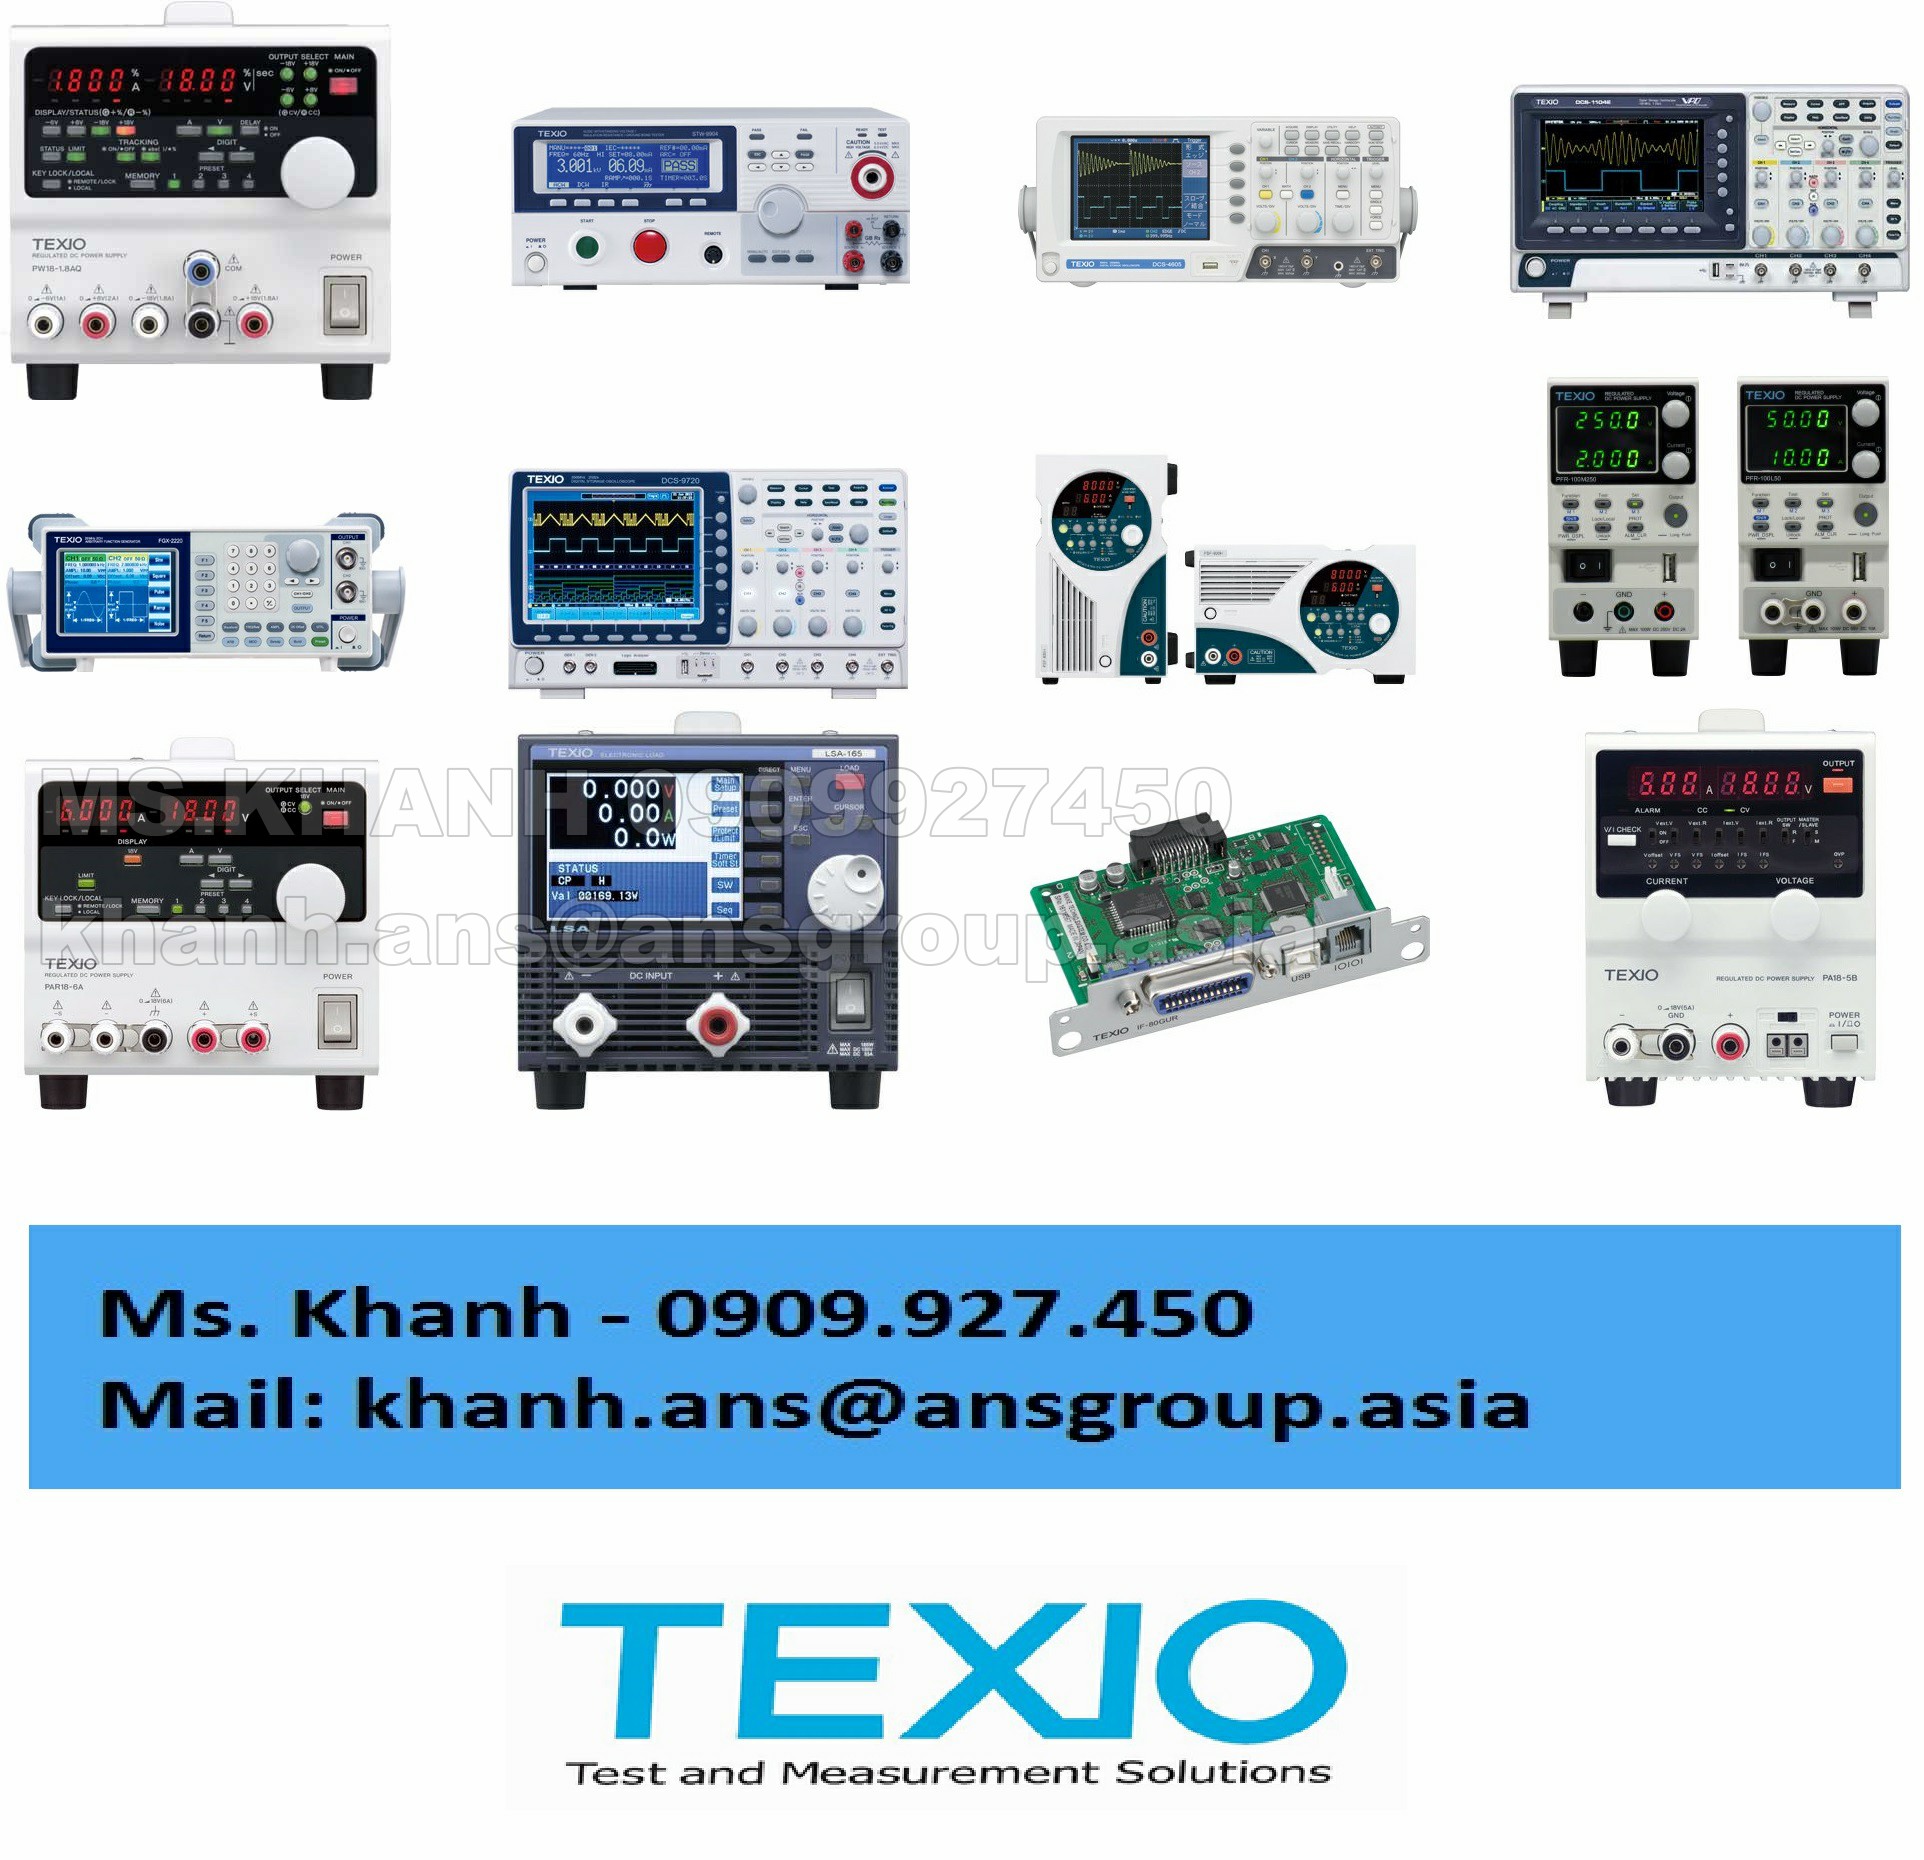 bo-nguon-pw18-3adp-dc-power-supply-texio-vietnam.png